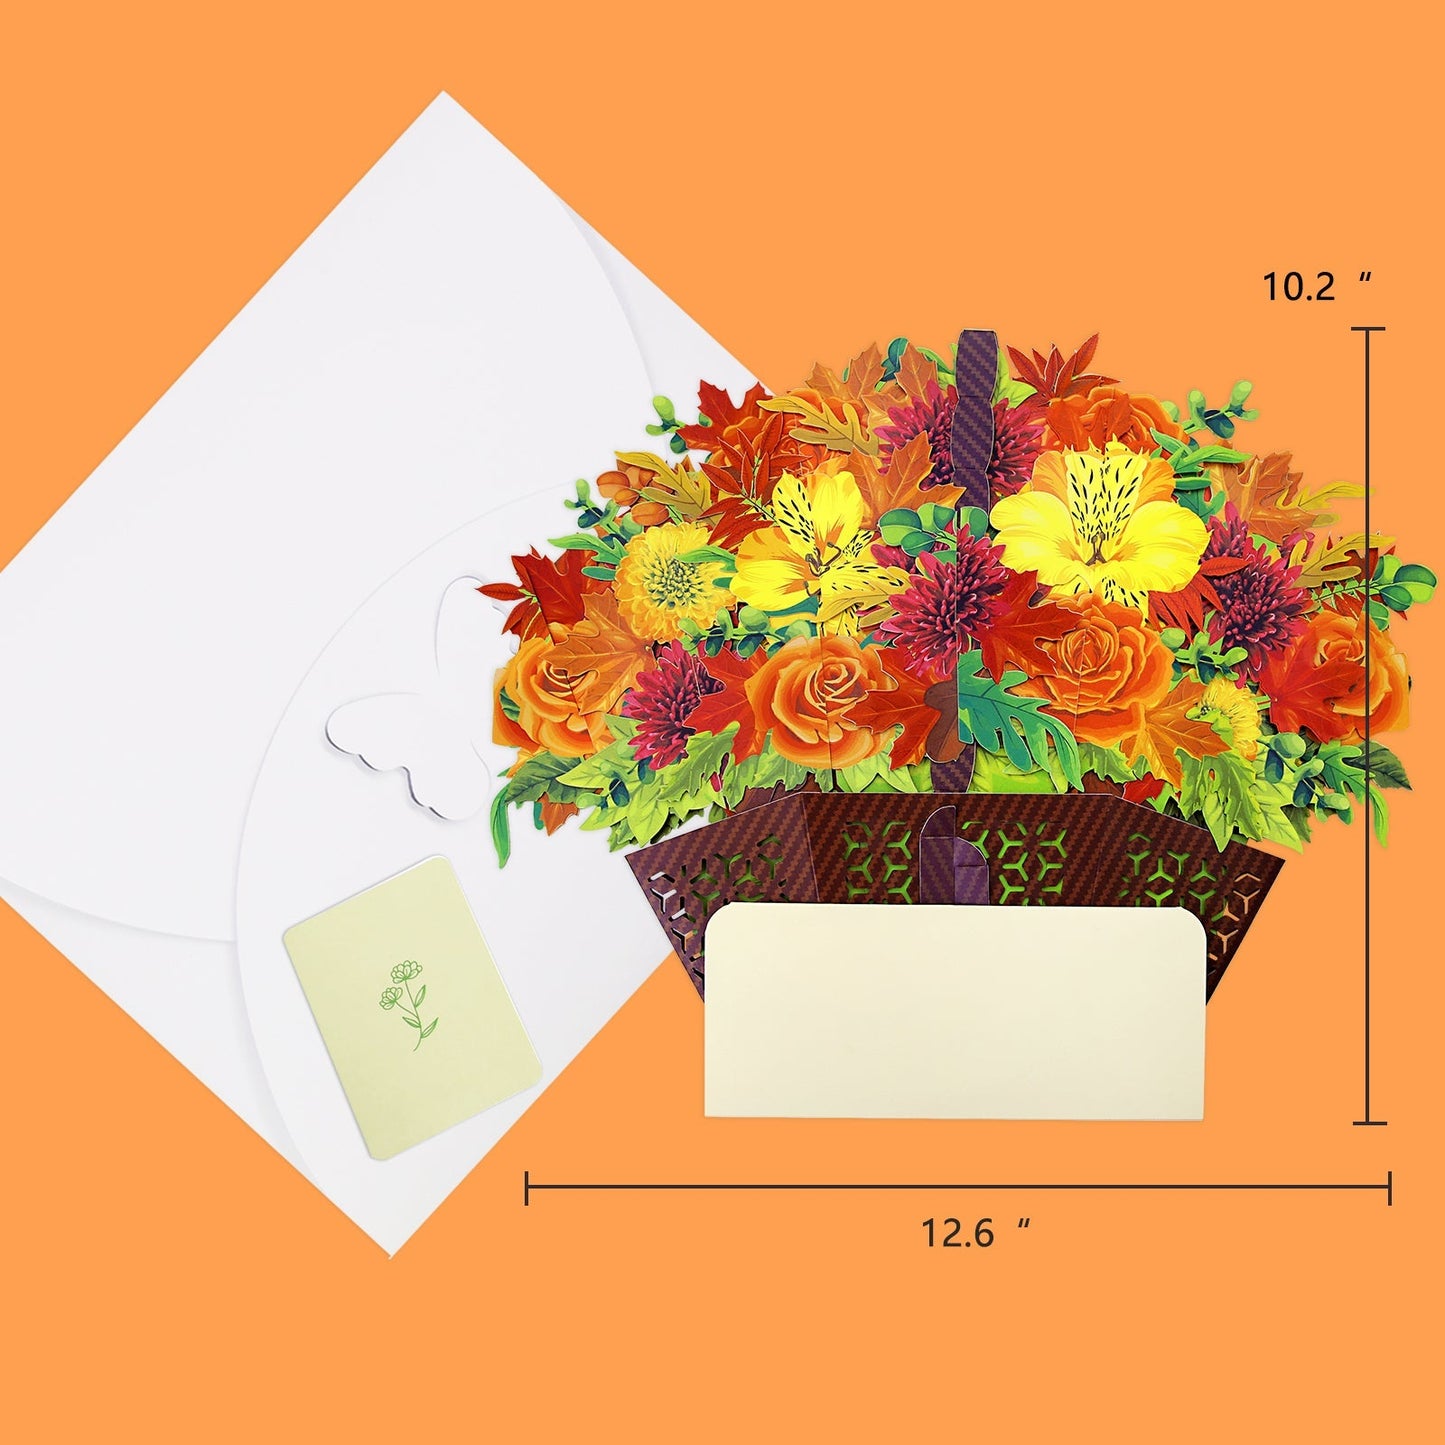 Fall Flower Basket